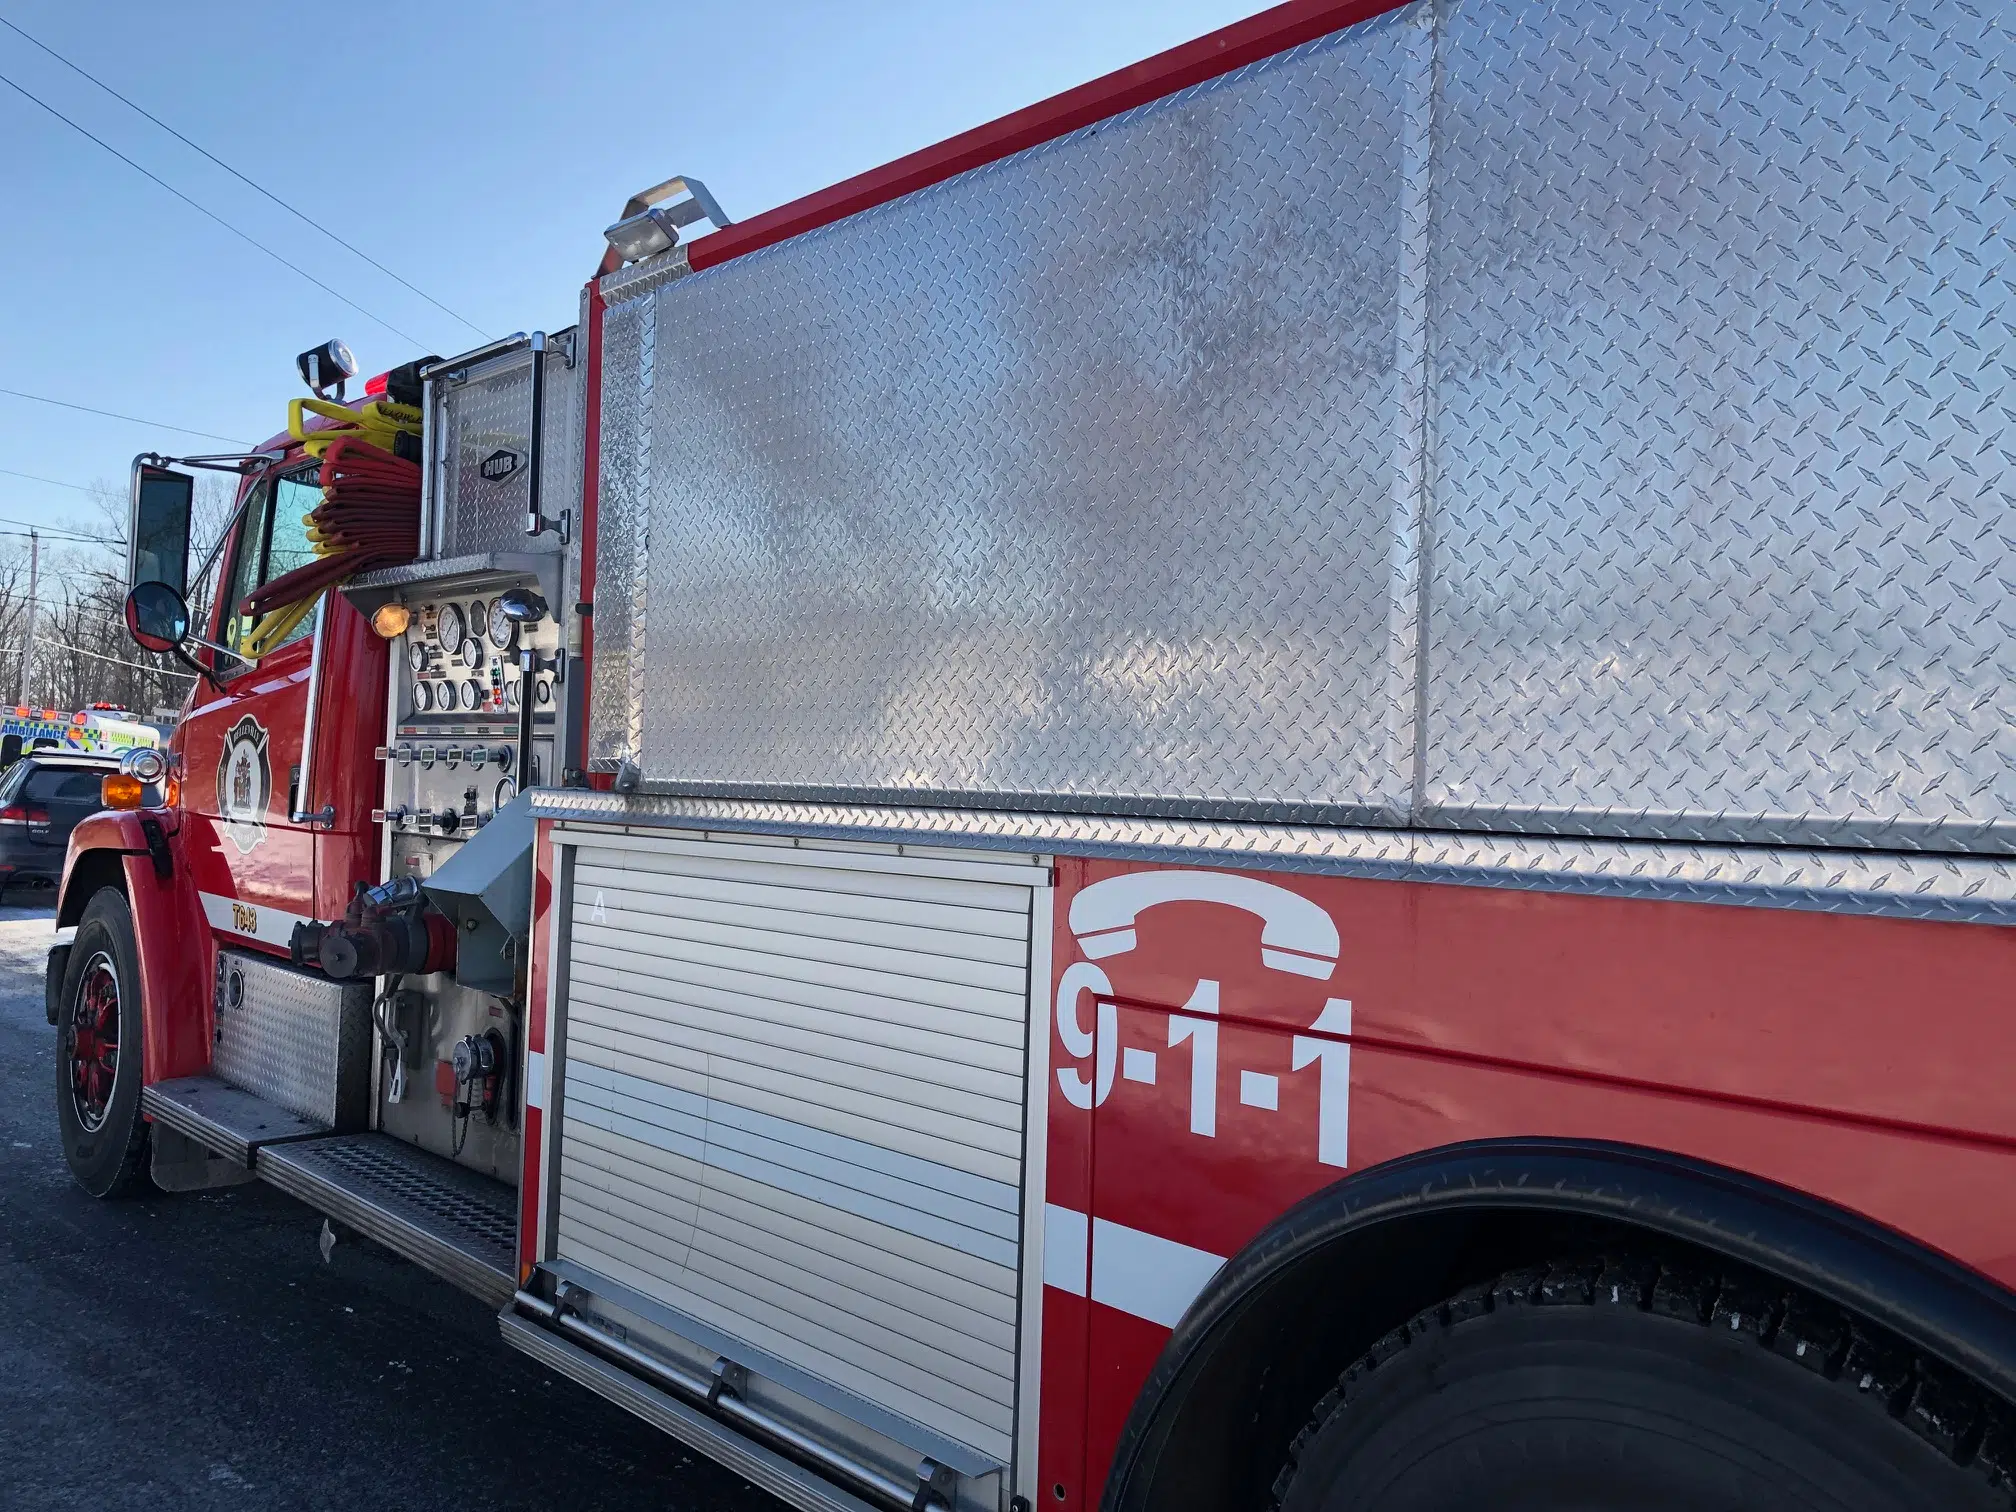 UPDATE: Fire at Belleville's P&G plant